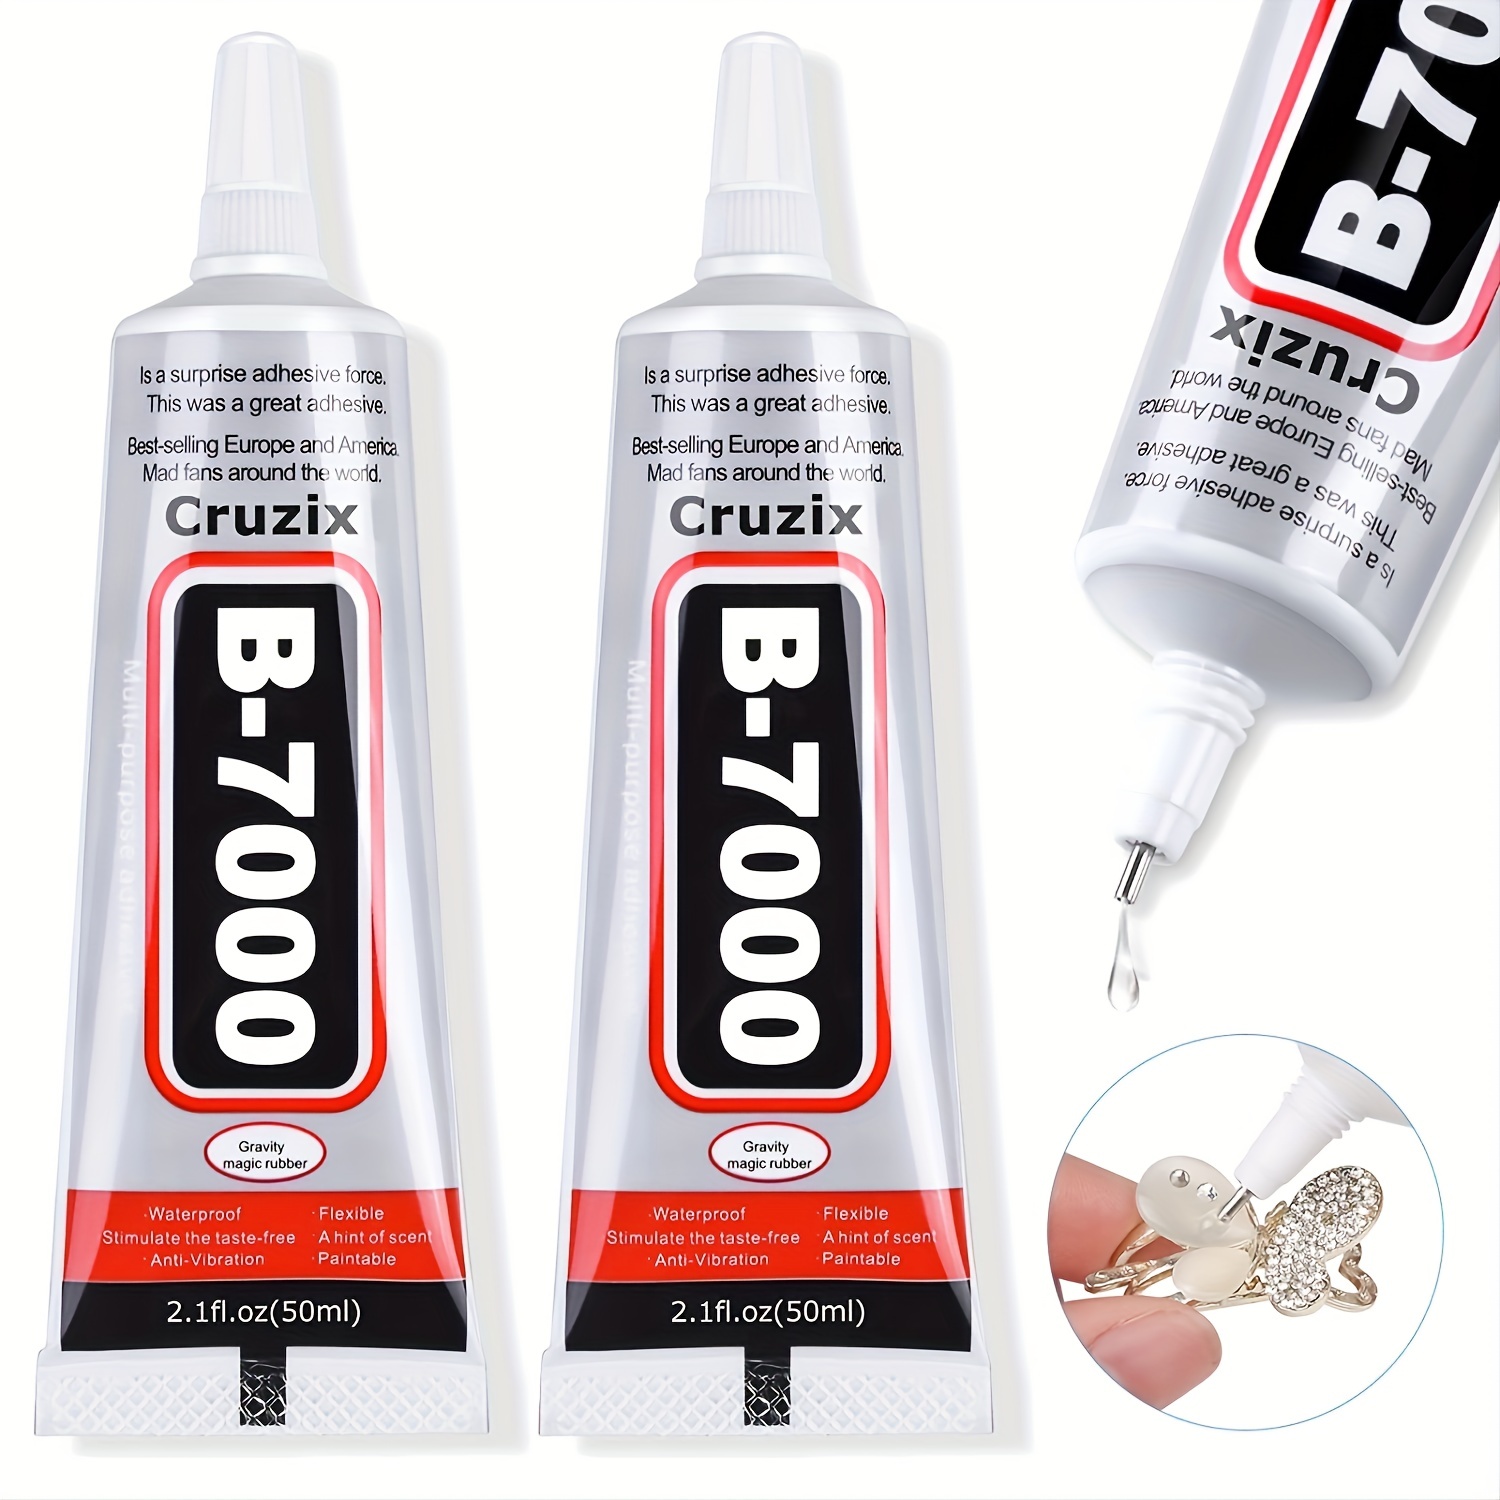  B-7000 Glue Clear for Rhinestone Crafts, Jewelry and